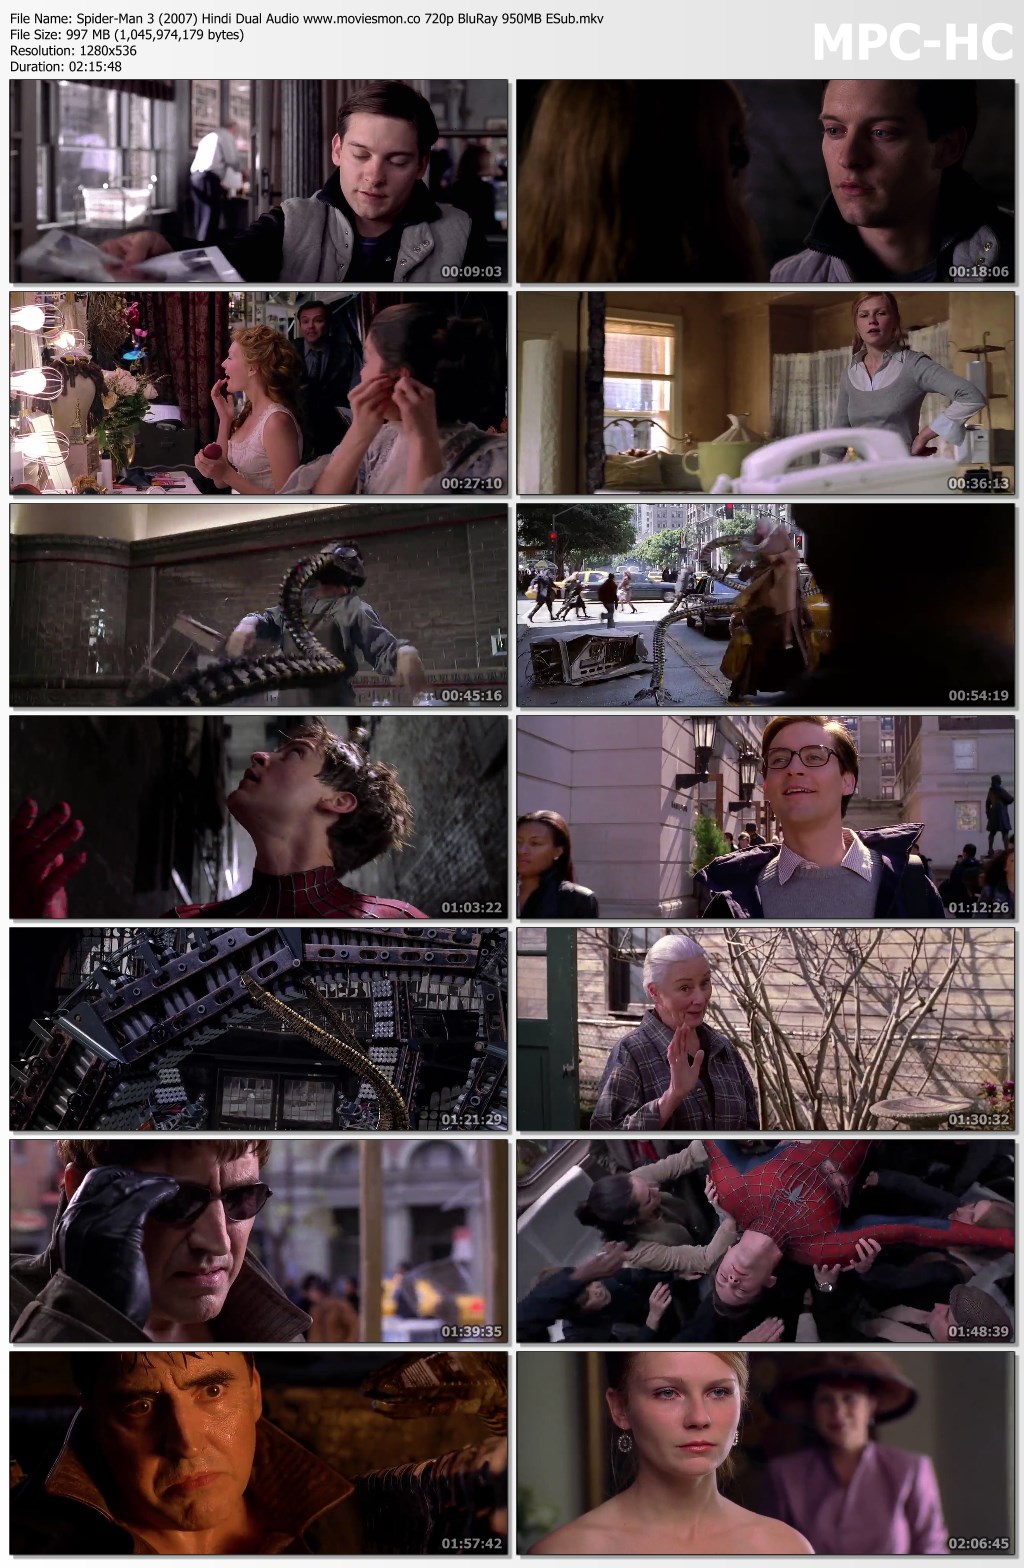 spiderman 3 full movie in hindi free download hd